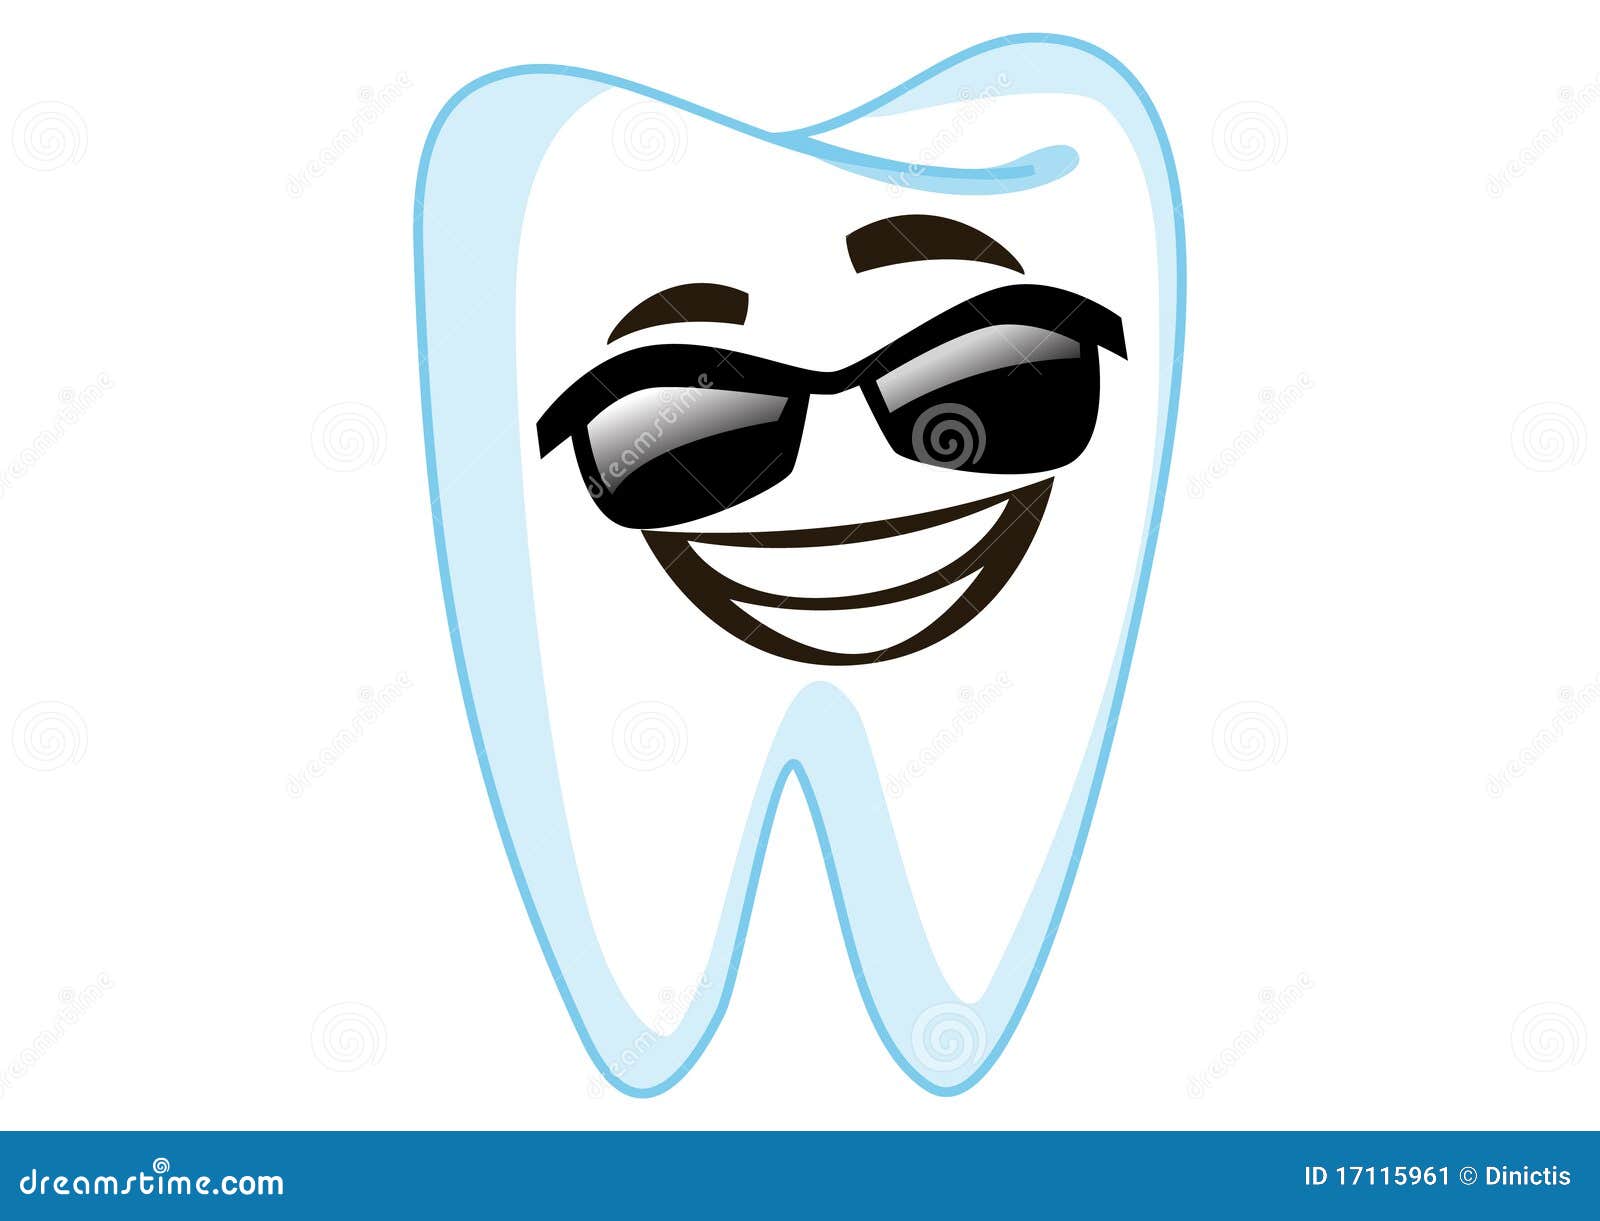 sunglass tooth cartoon character 